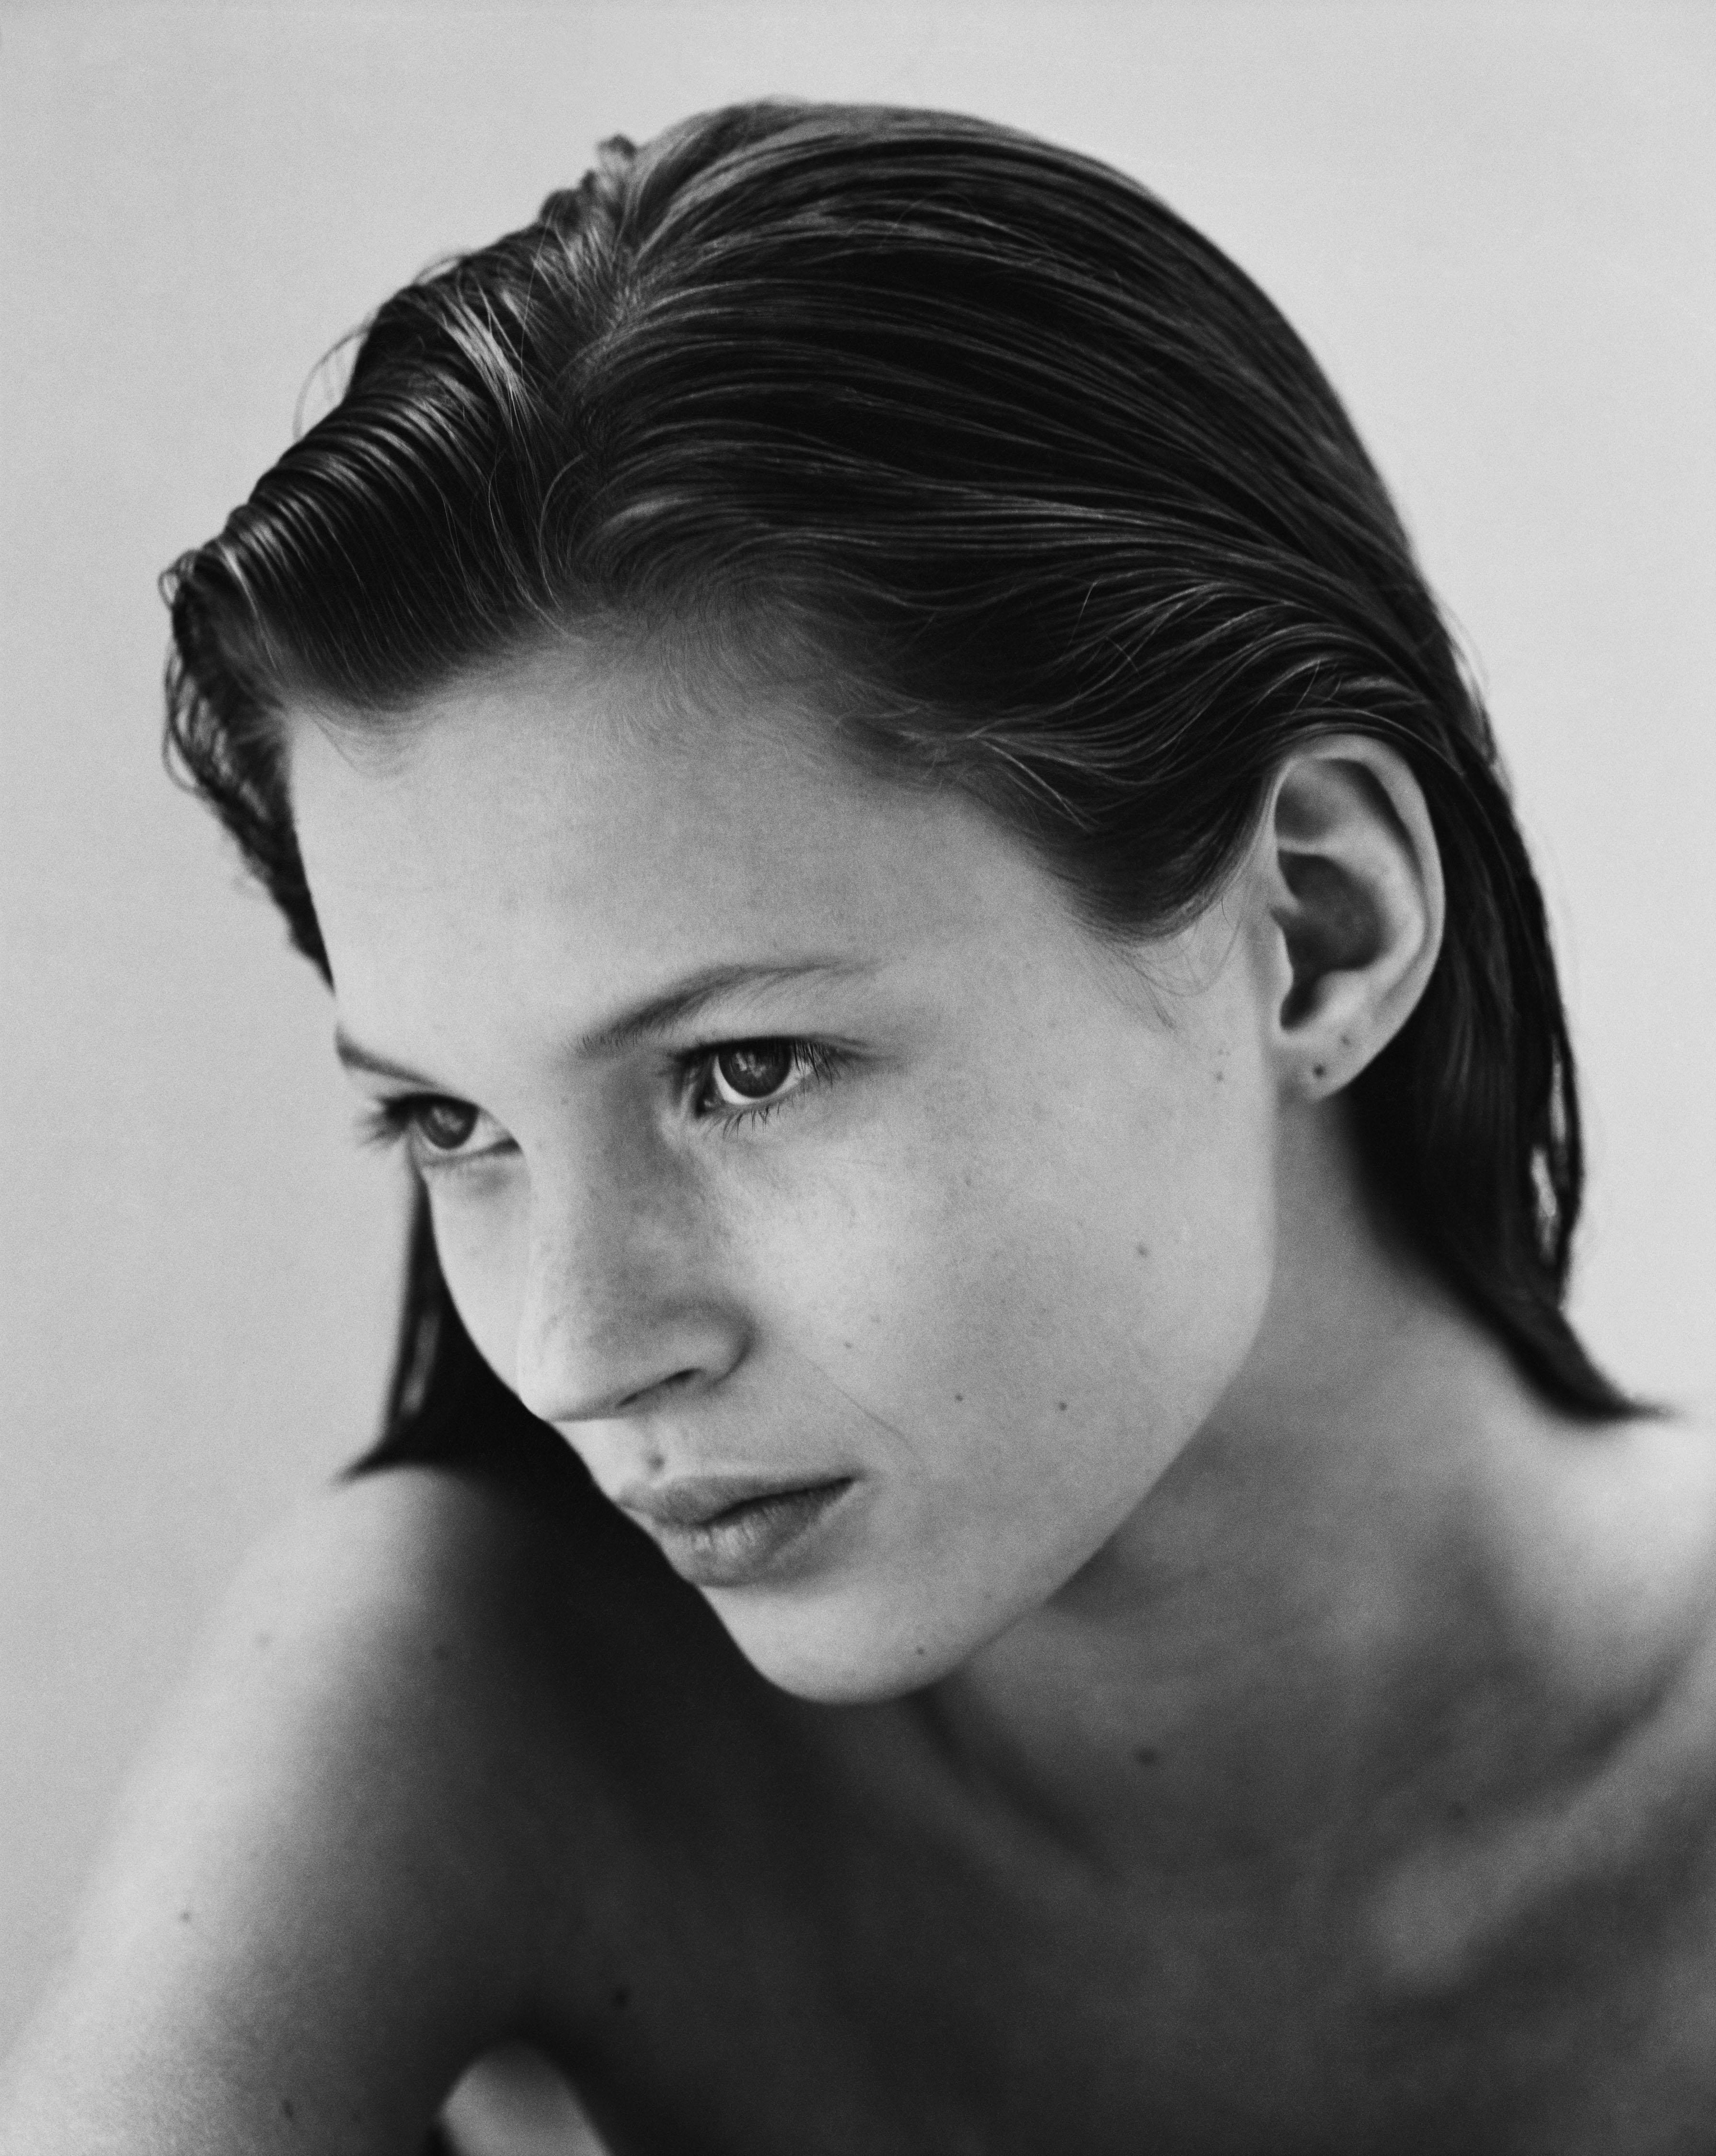 Jake Chessum Portrait Photograph - Kate Moss at 16